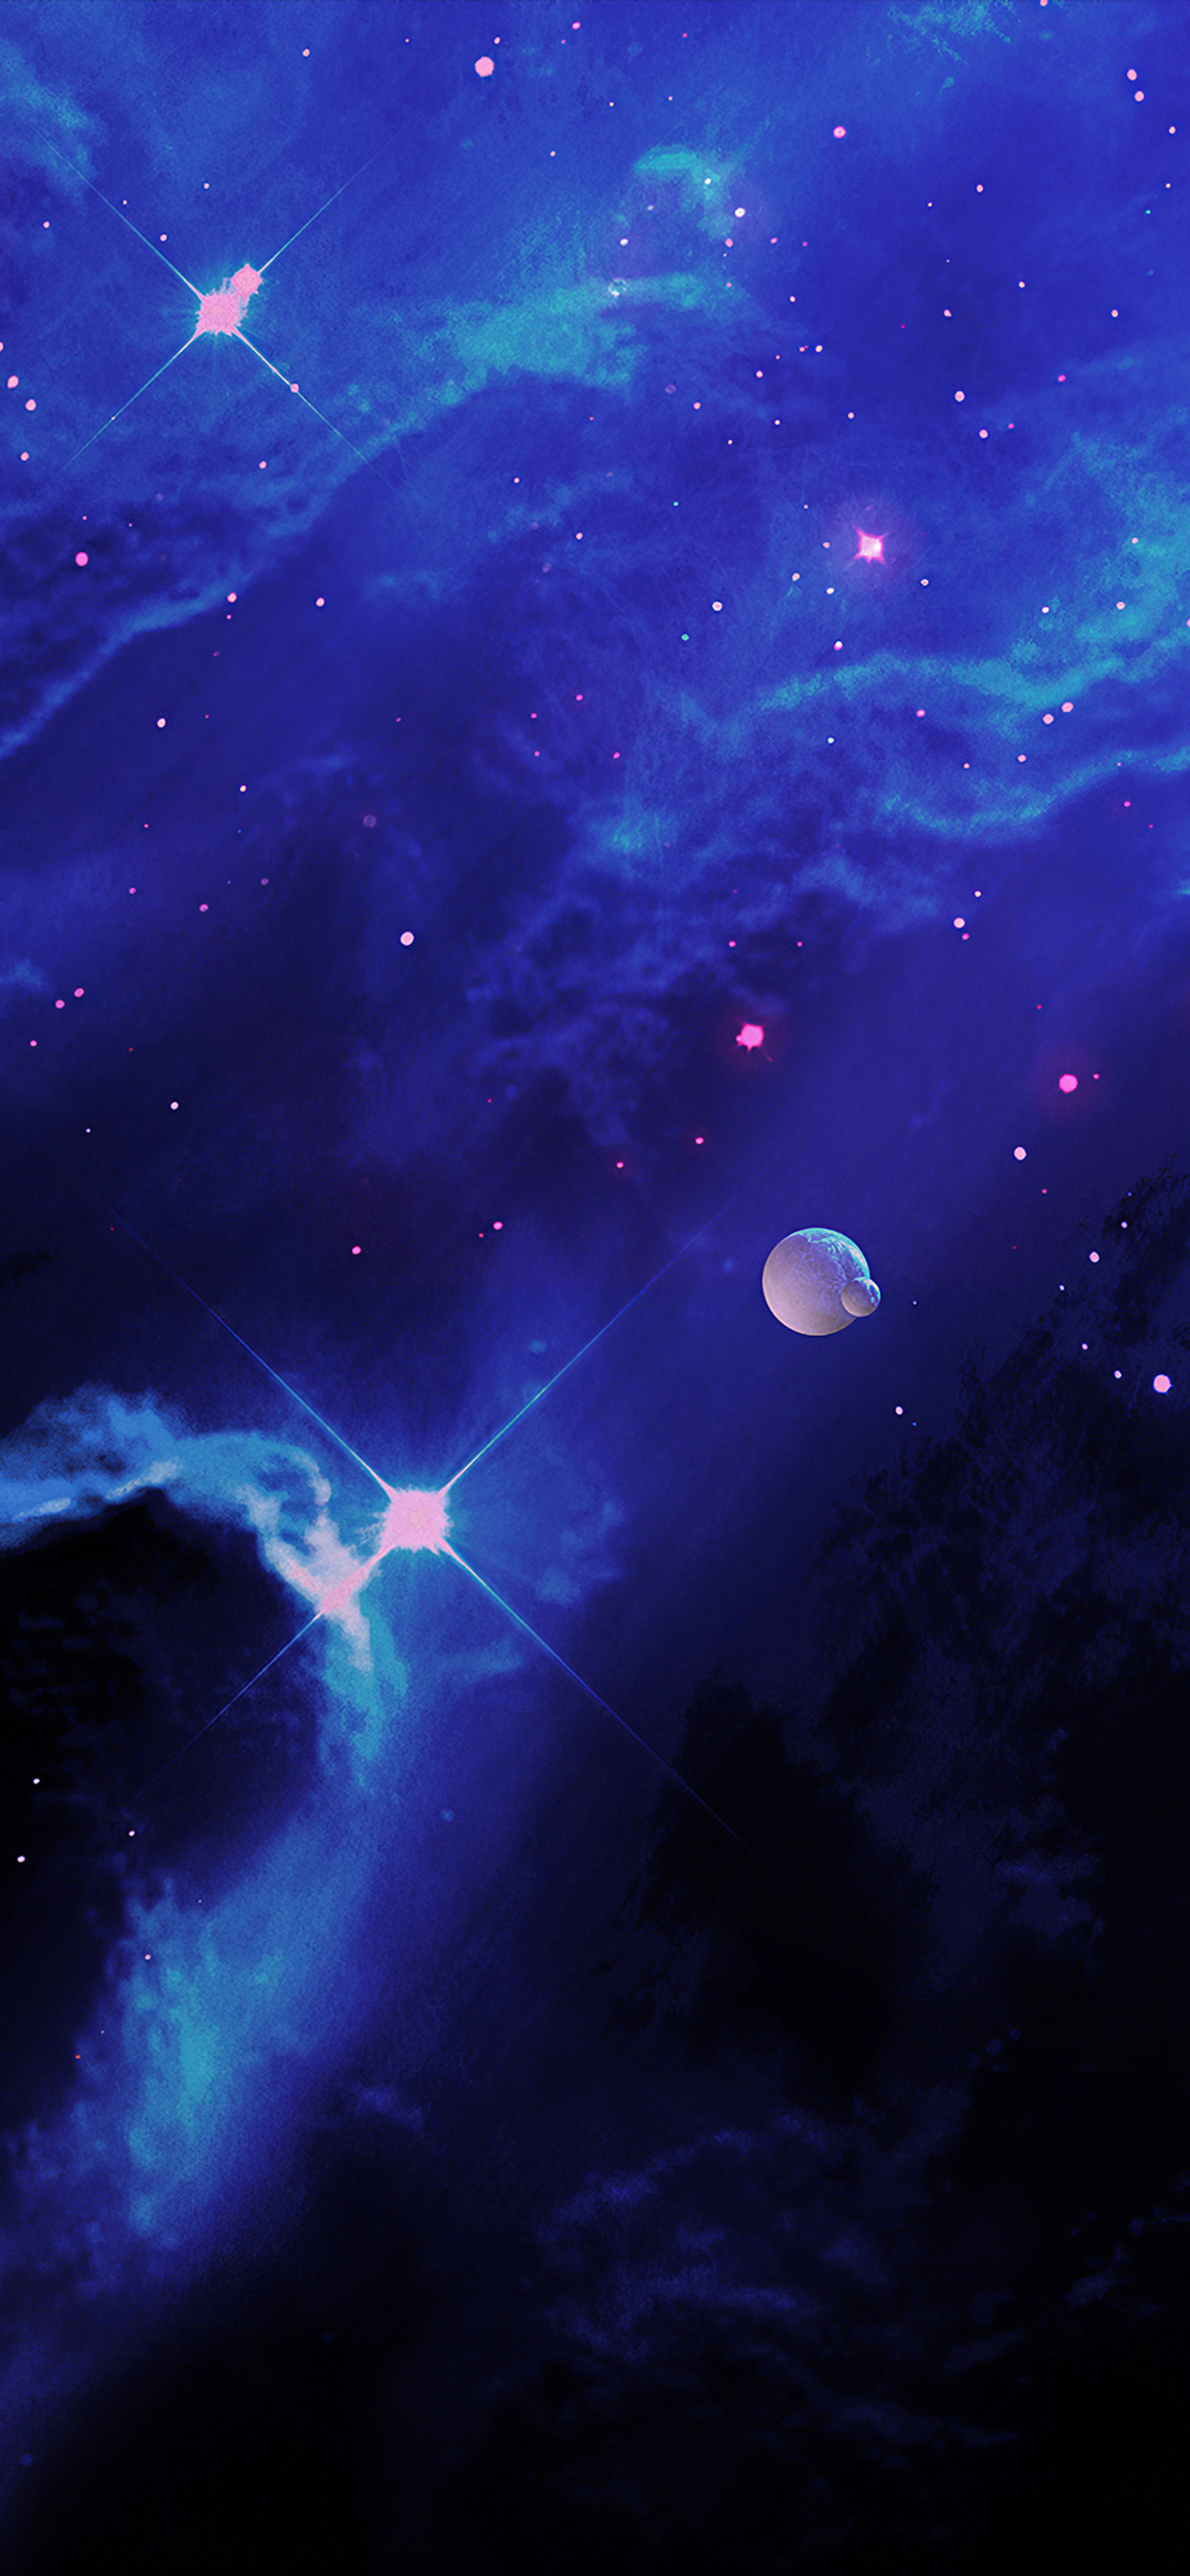 dark-realm-planets-4k-px.jpg